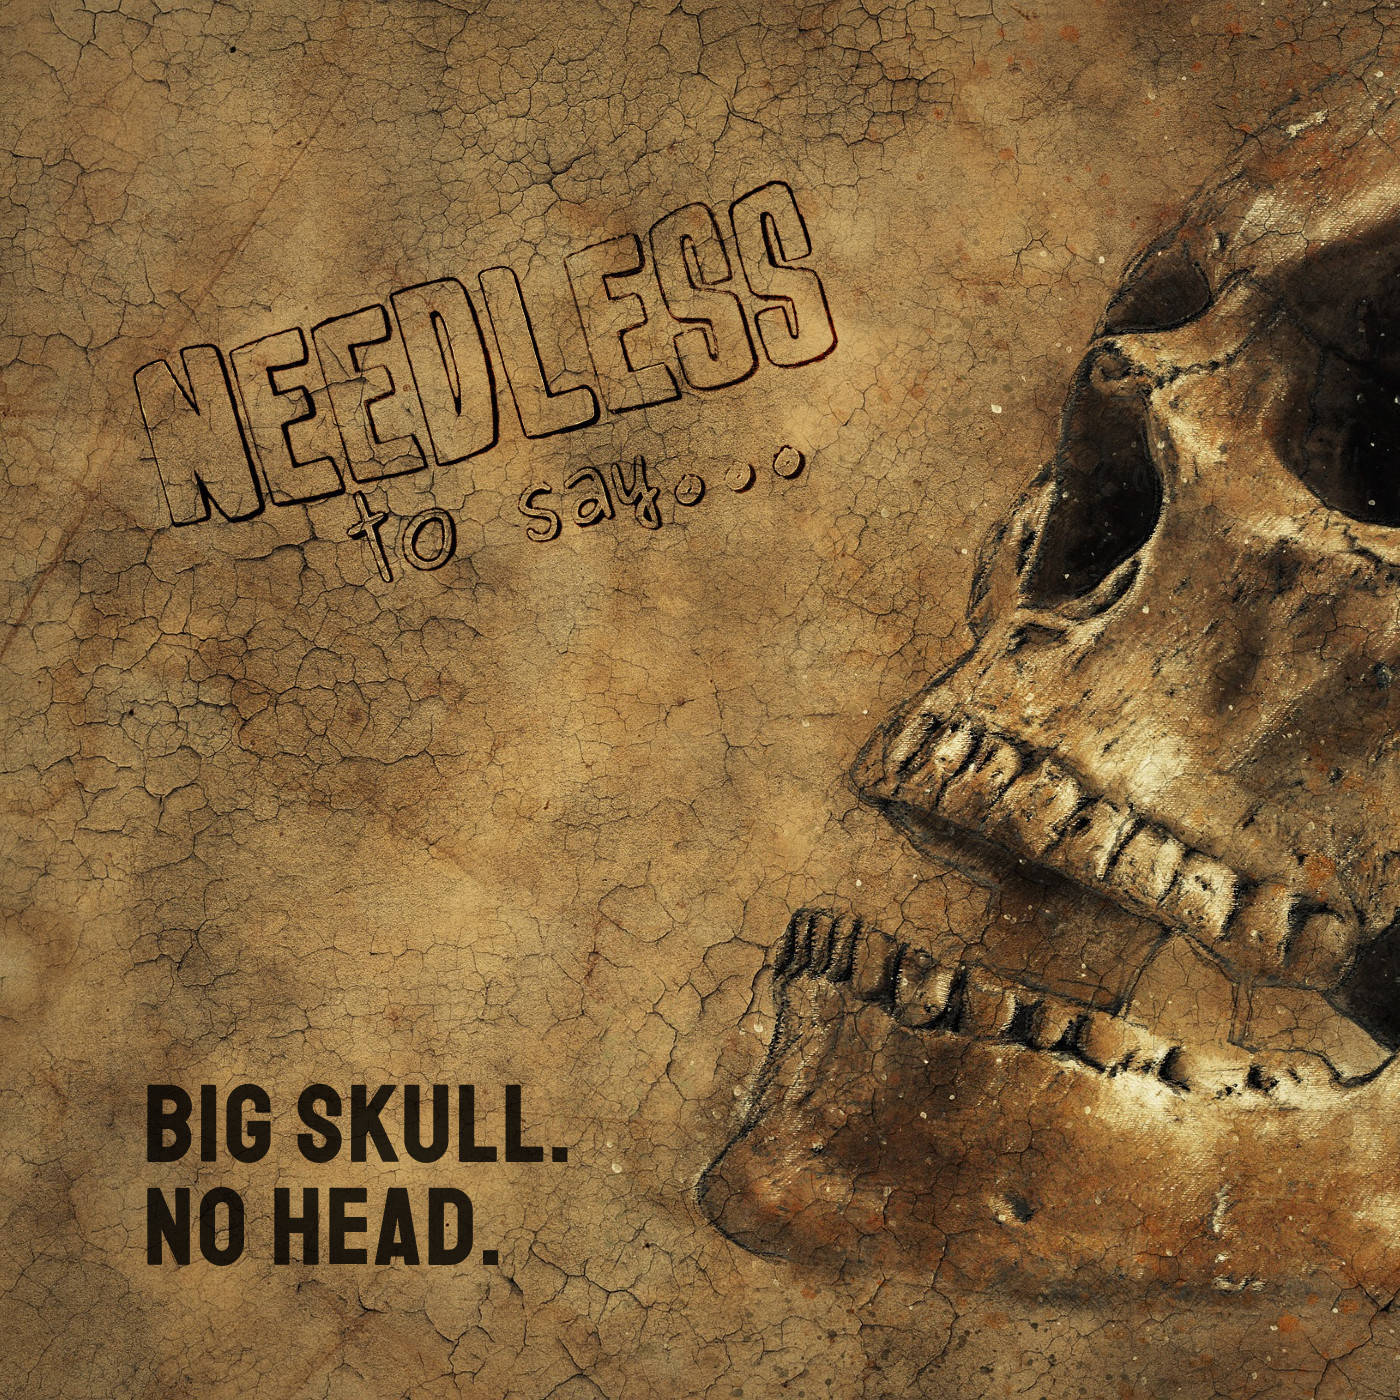 Big Skull. No Head. Image